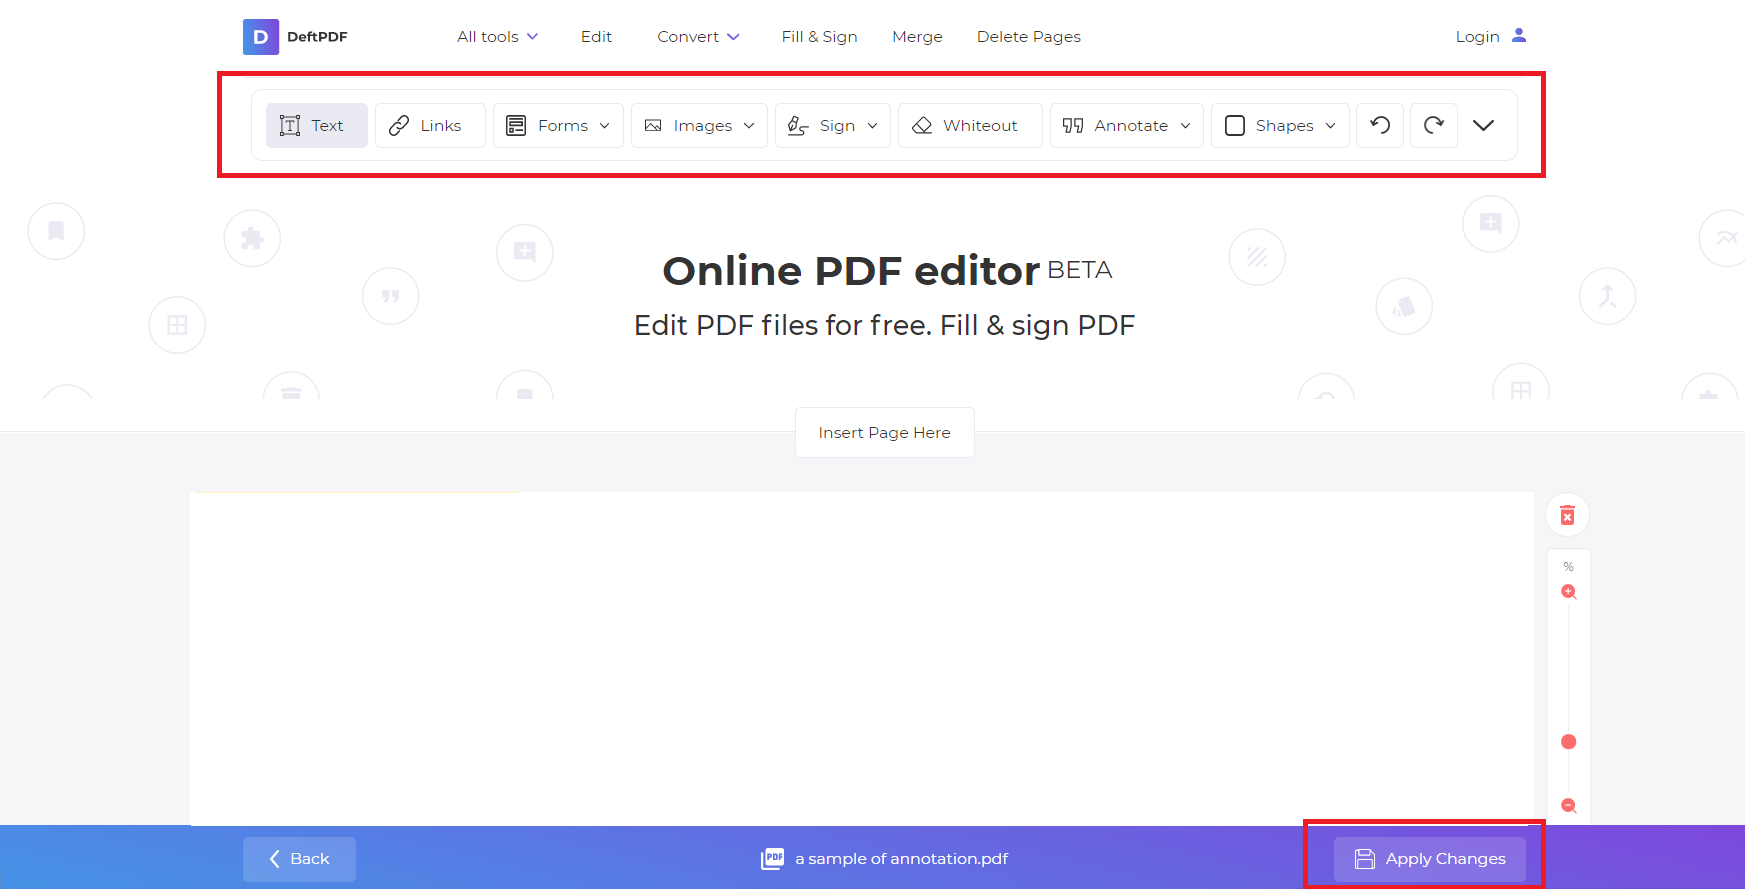 start using editing tool using DeftPDF